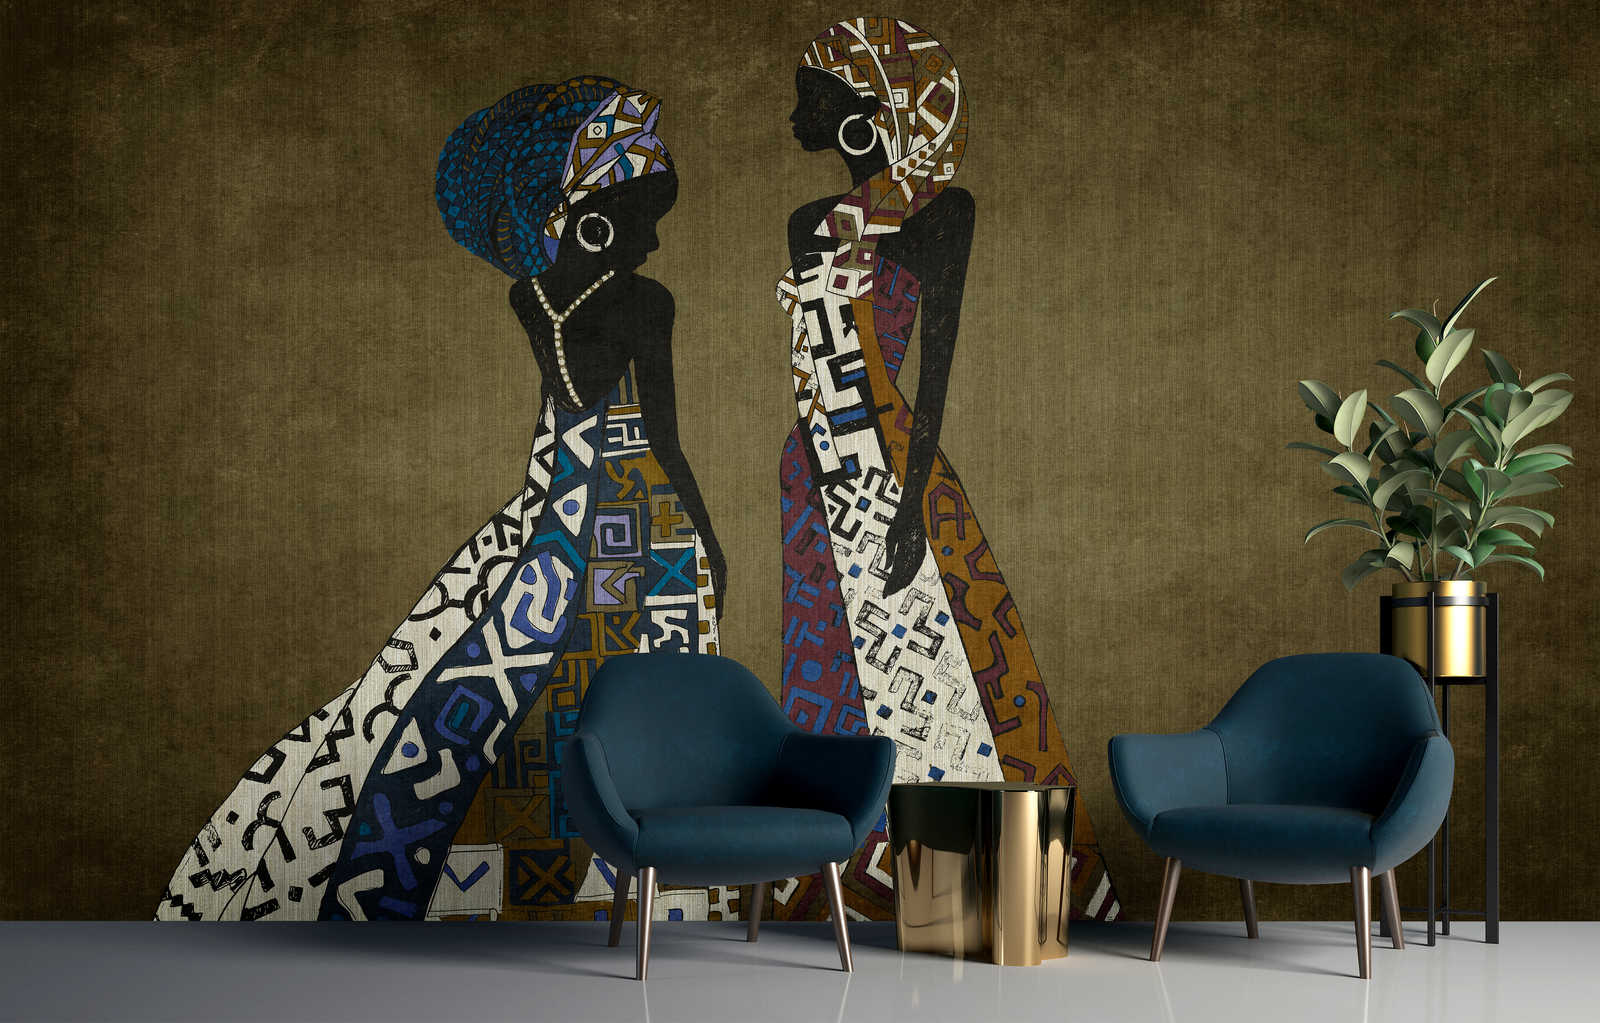             Nairobi 3 - Diseño de vestido de papel pintado de África con patrón étnico
        